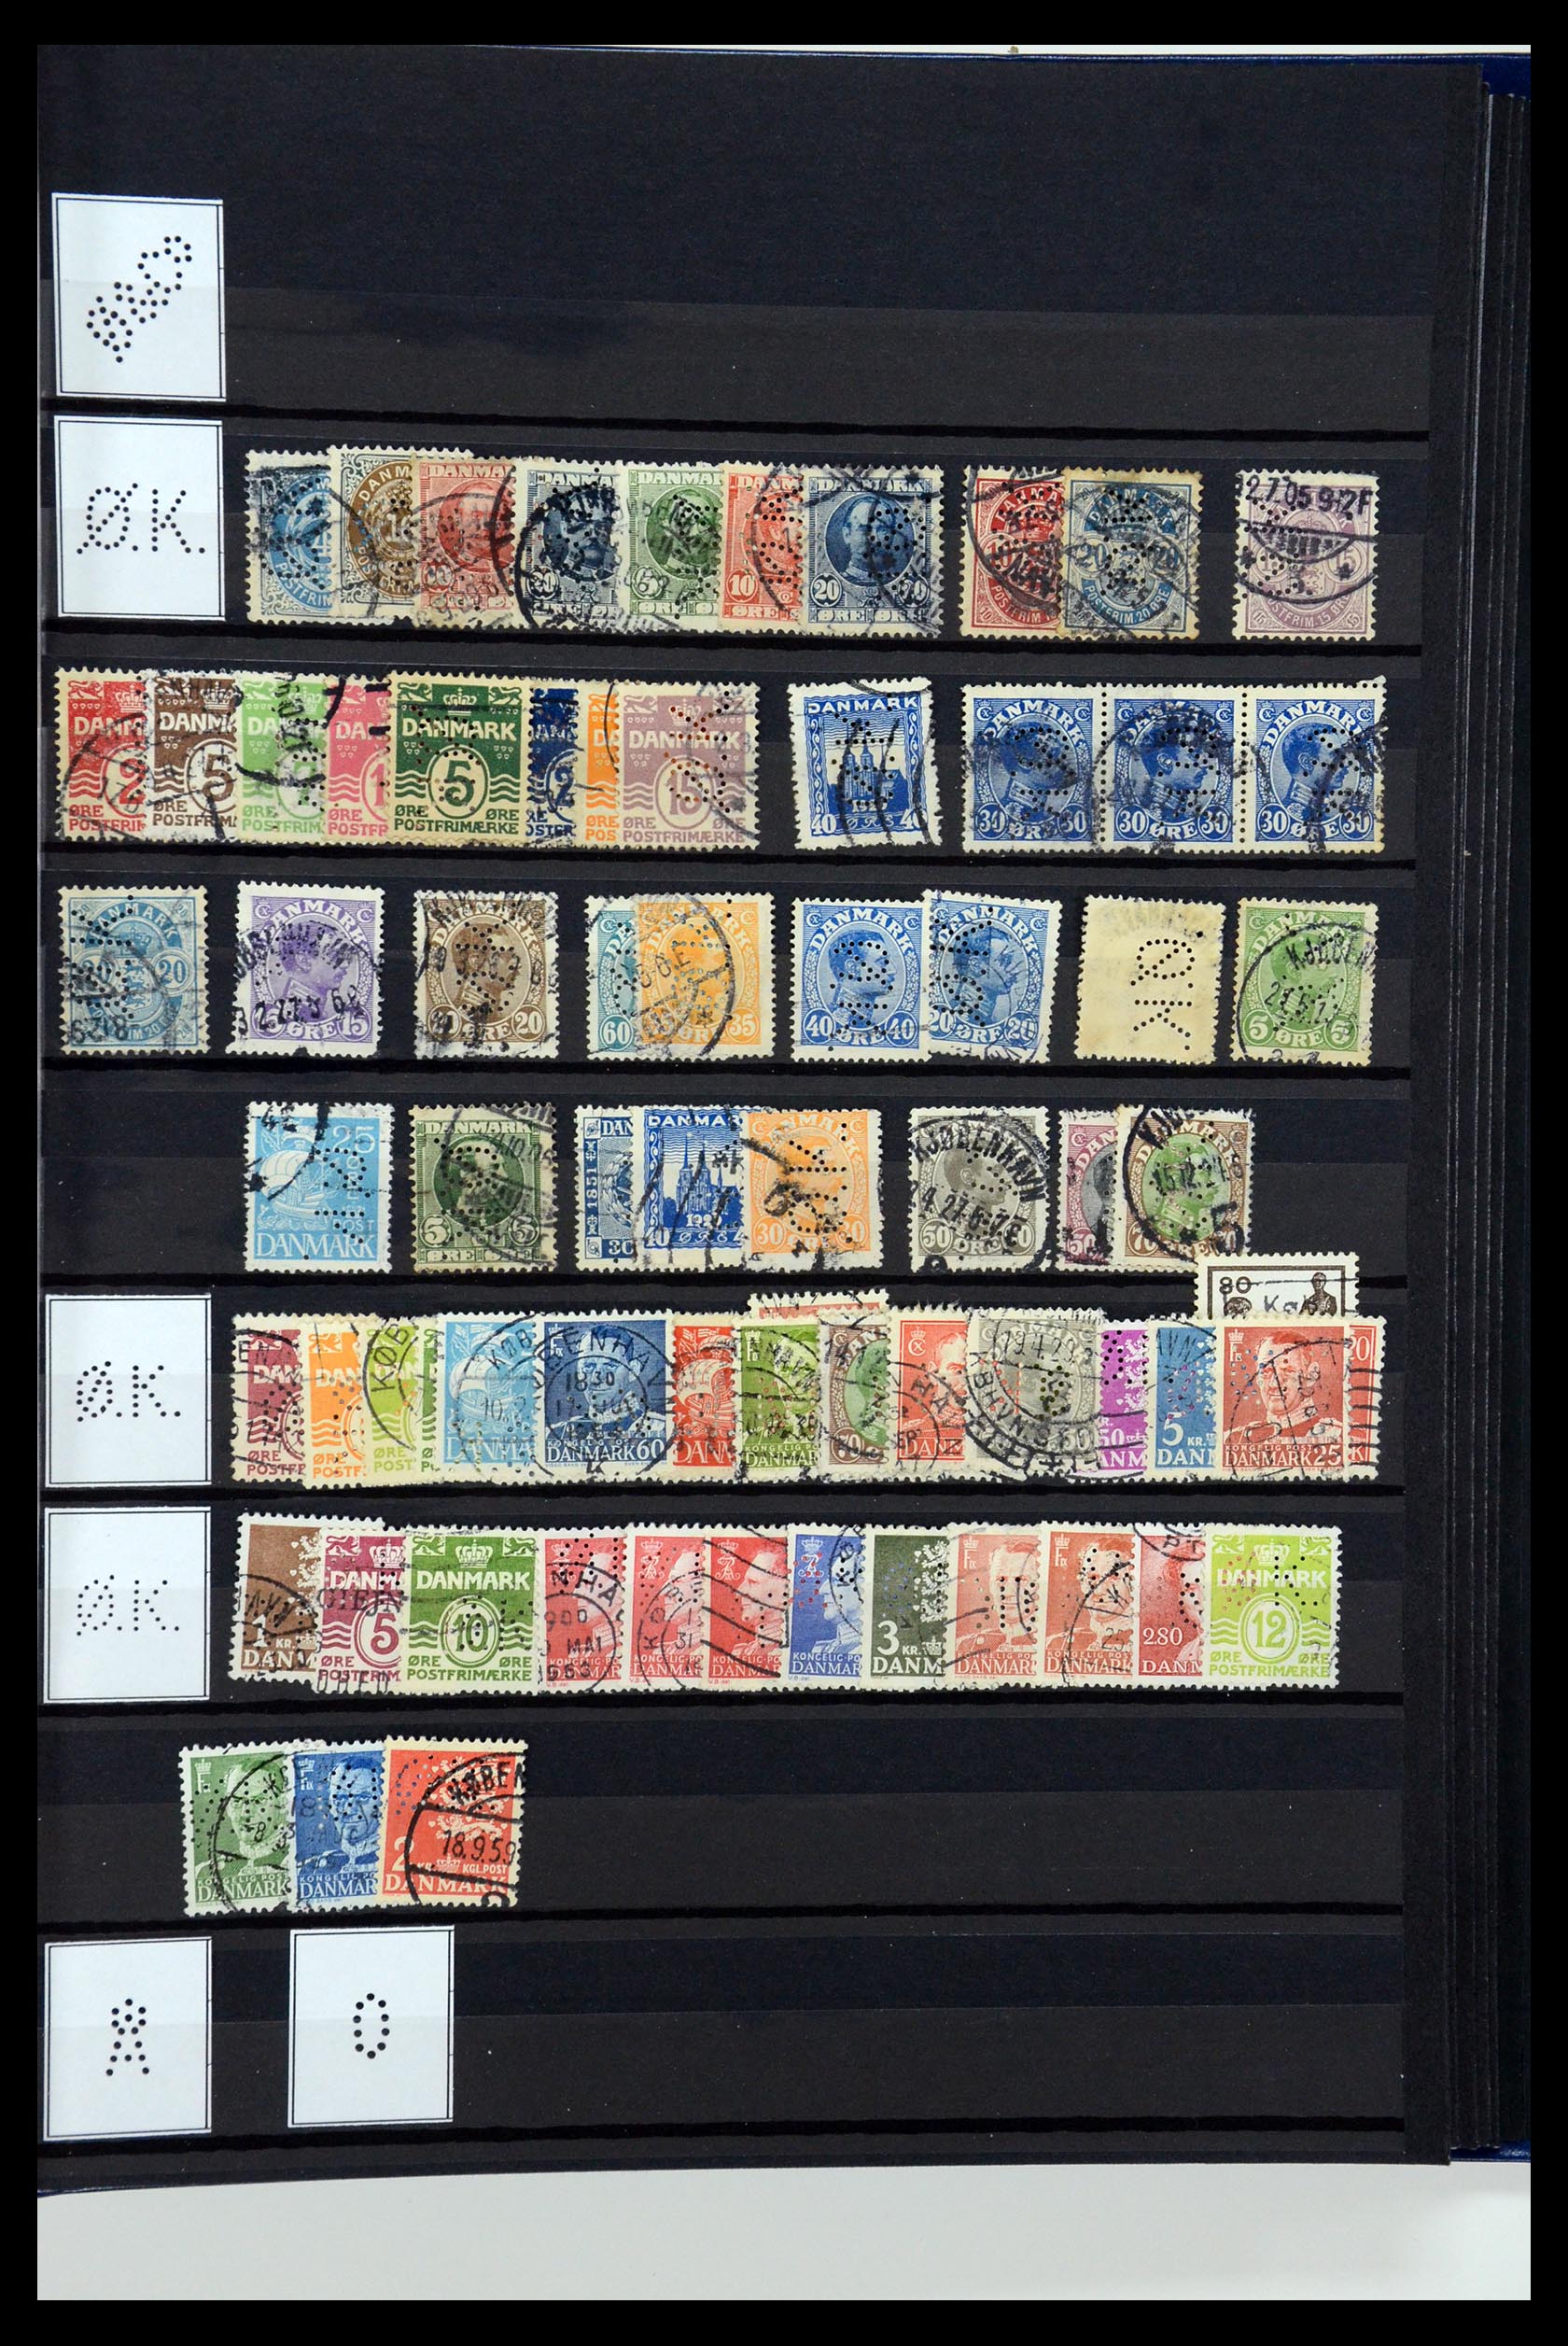 36396 227 - Stamp collection 36396 Denmark perfins.